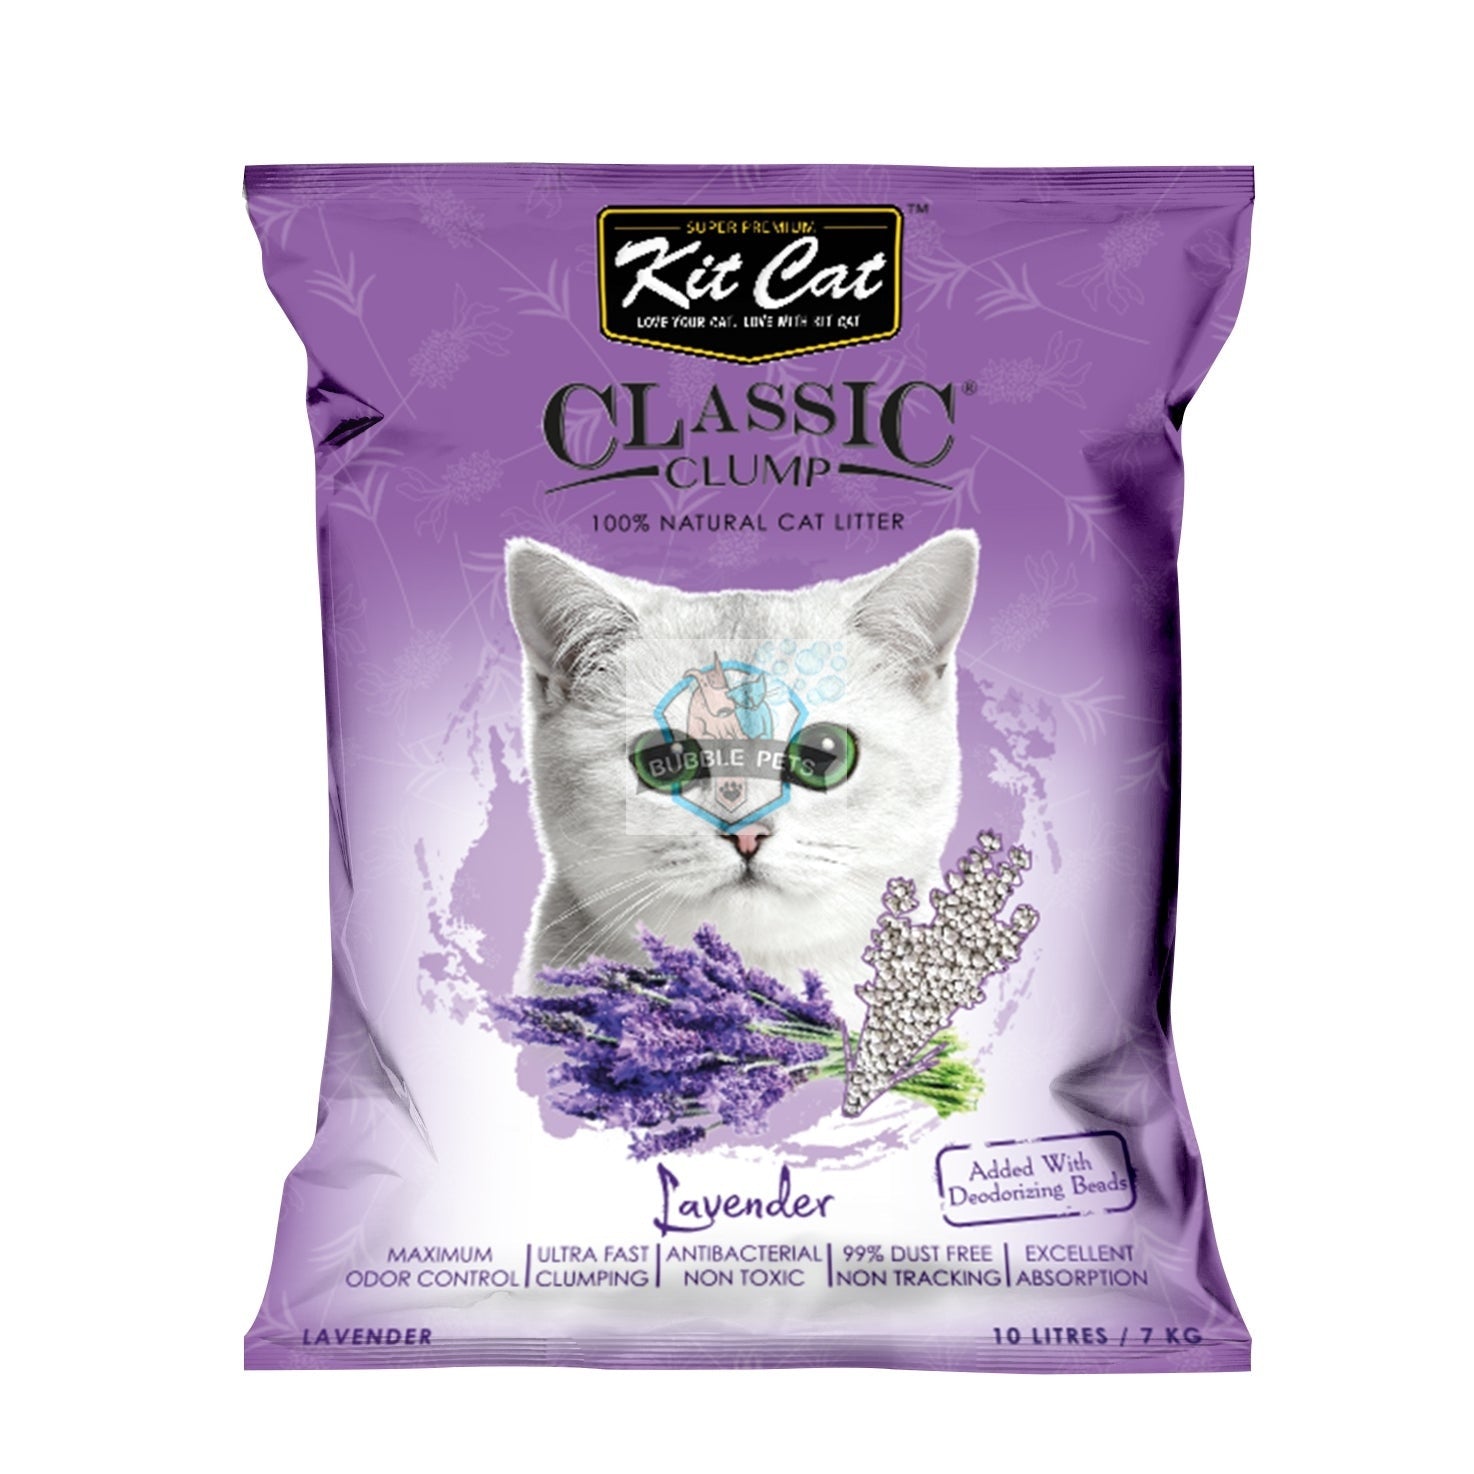 Kit Cat Classic Clump Lavender Cat Litter